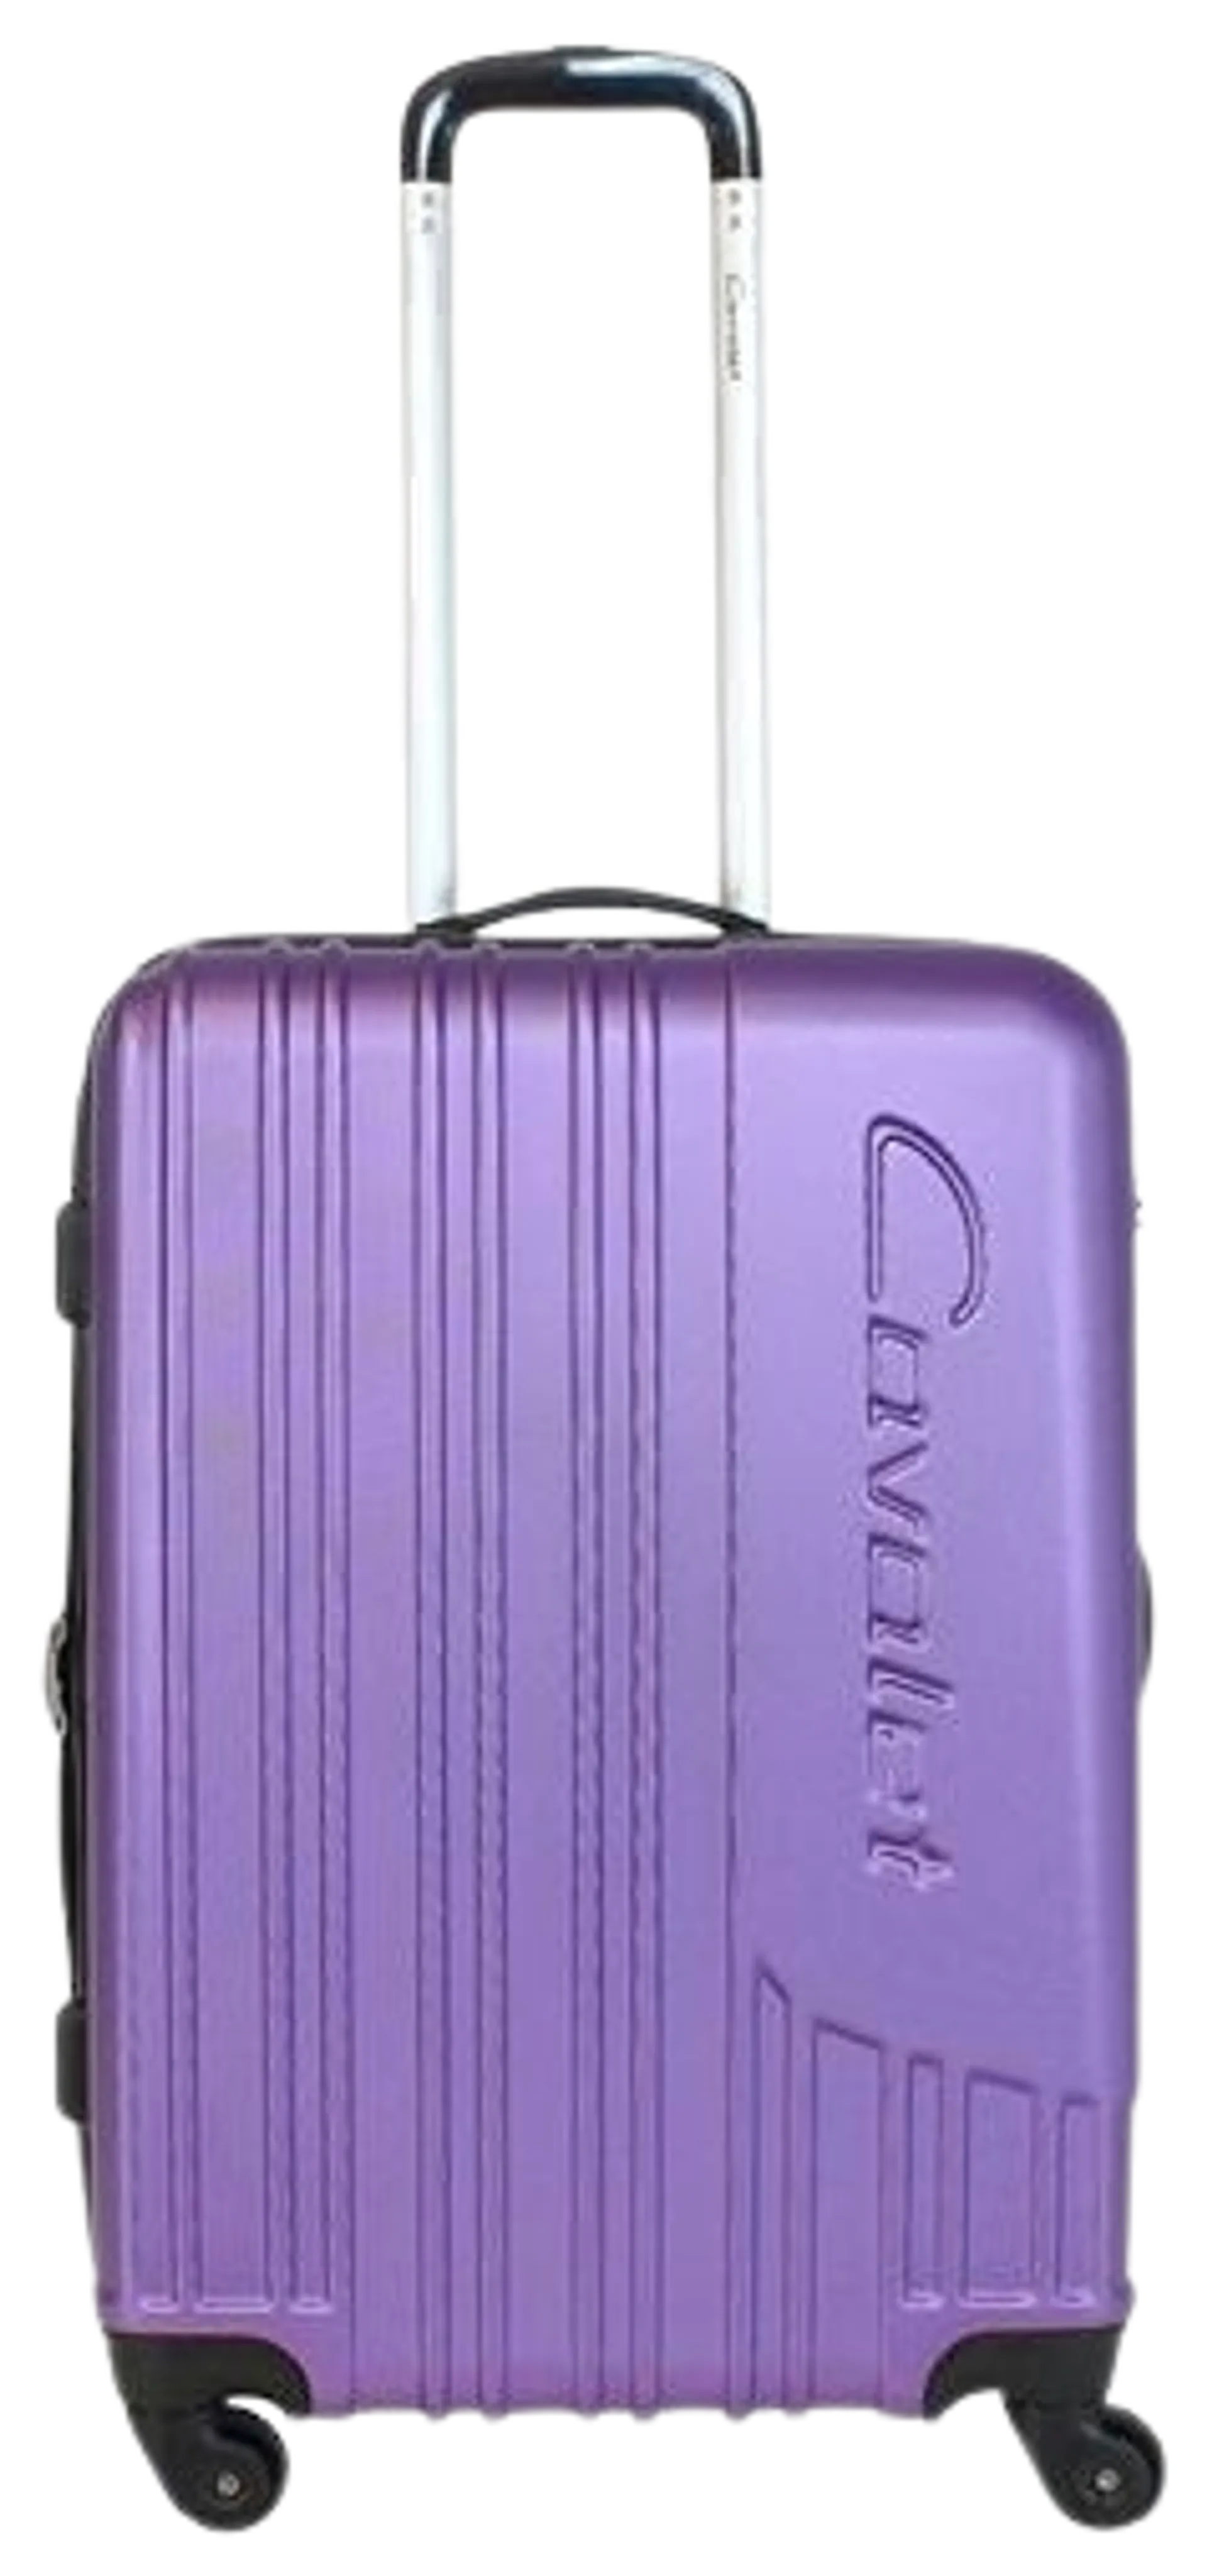 Cavalet Malibu matkalaukku M 64 cm, lila - 1